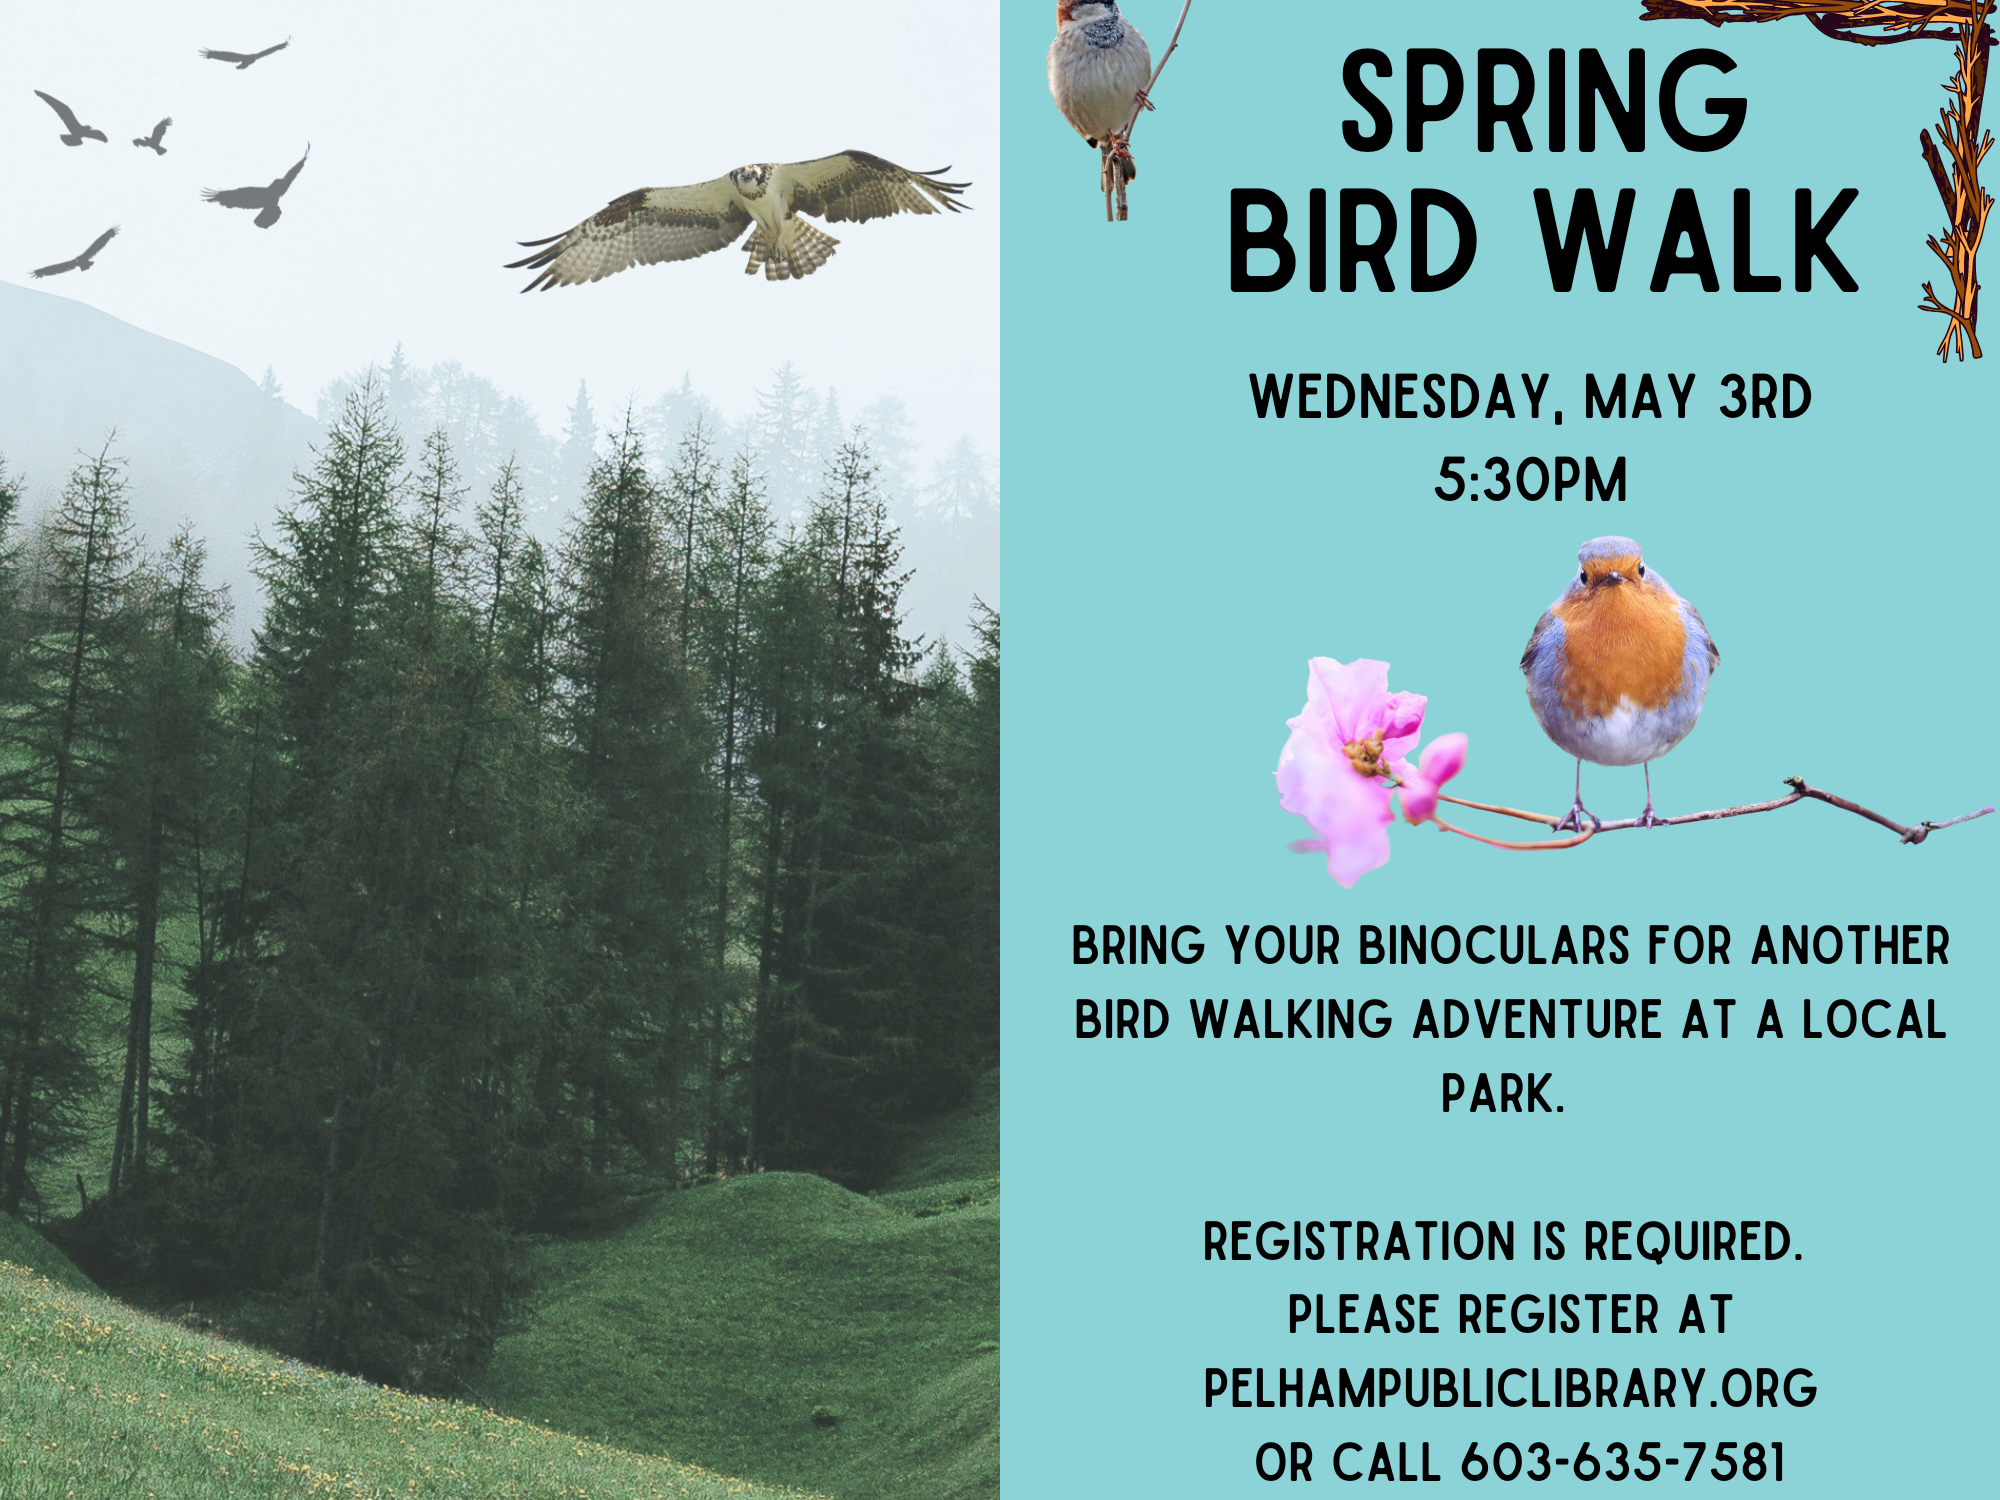 Spring Bird Walk, Wednesday, May 3rd 5:30pm